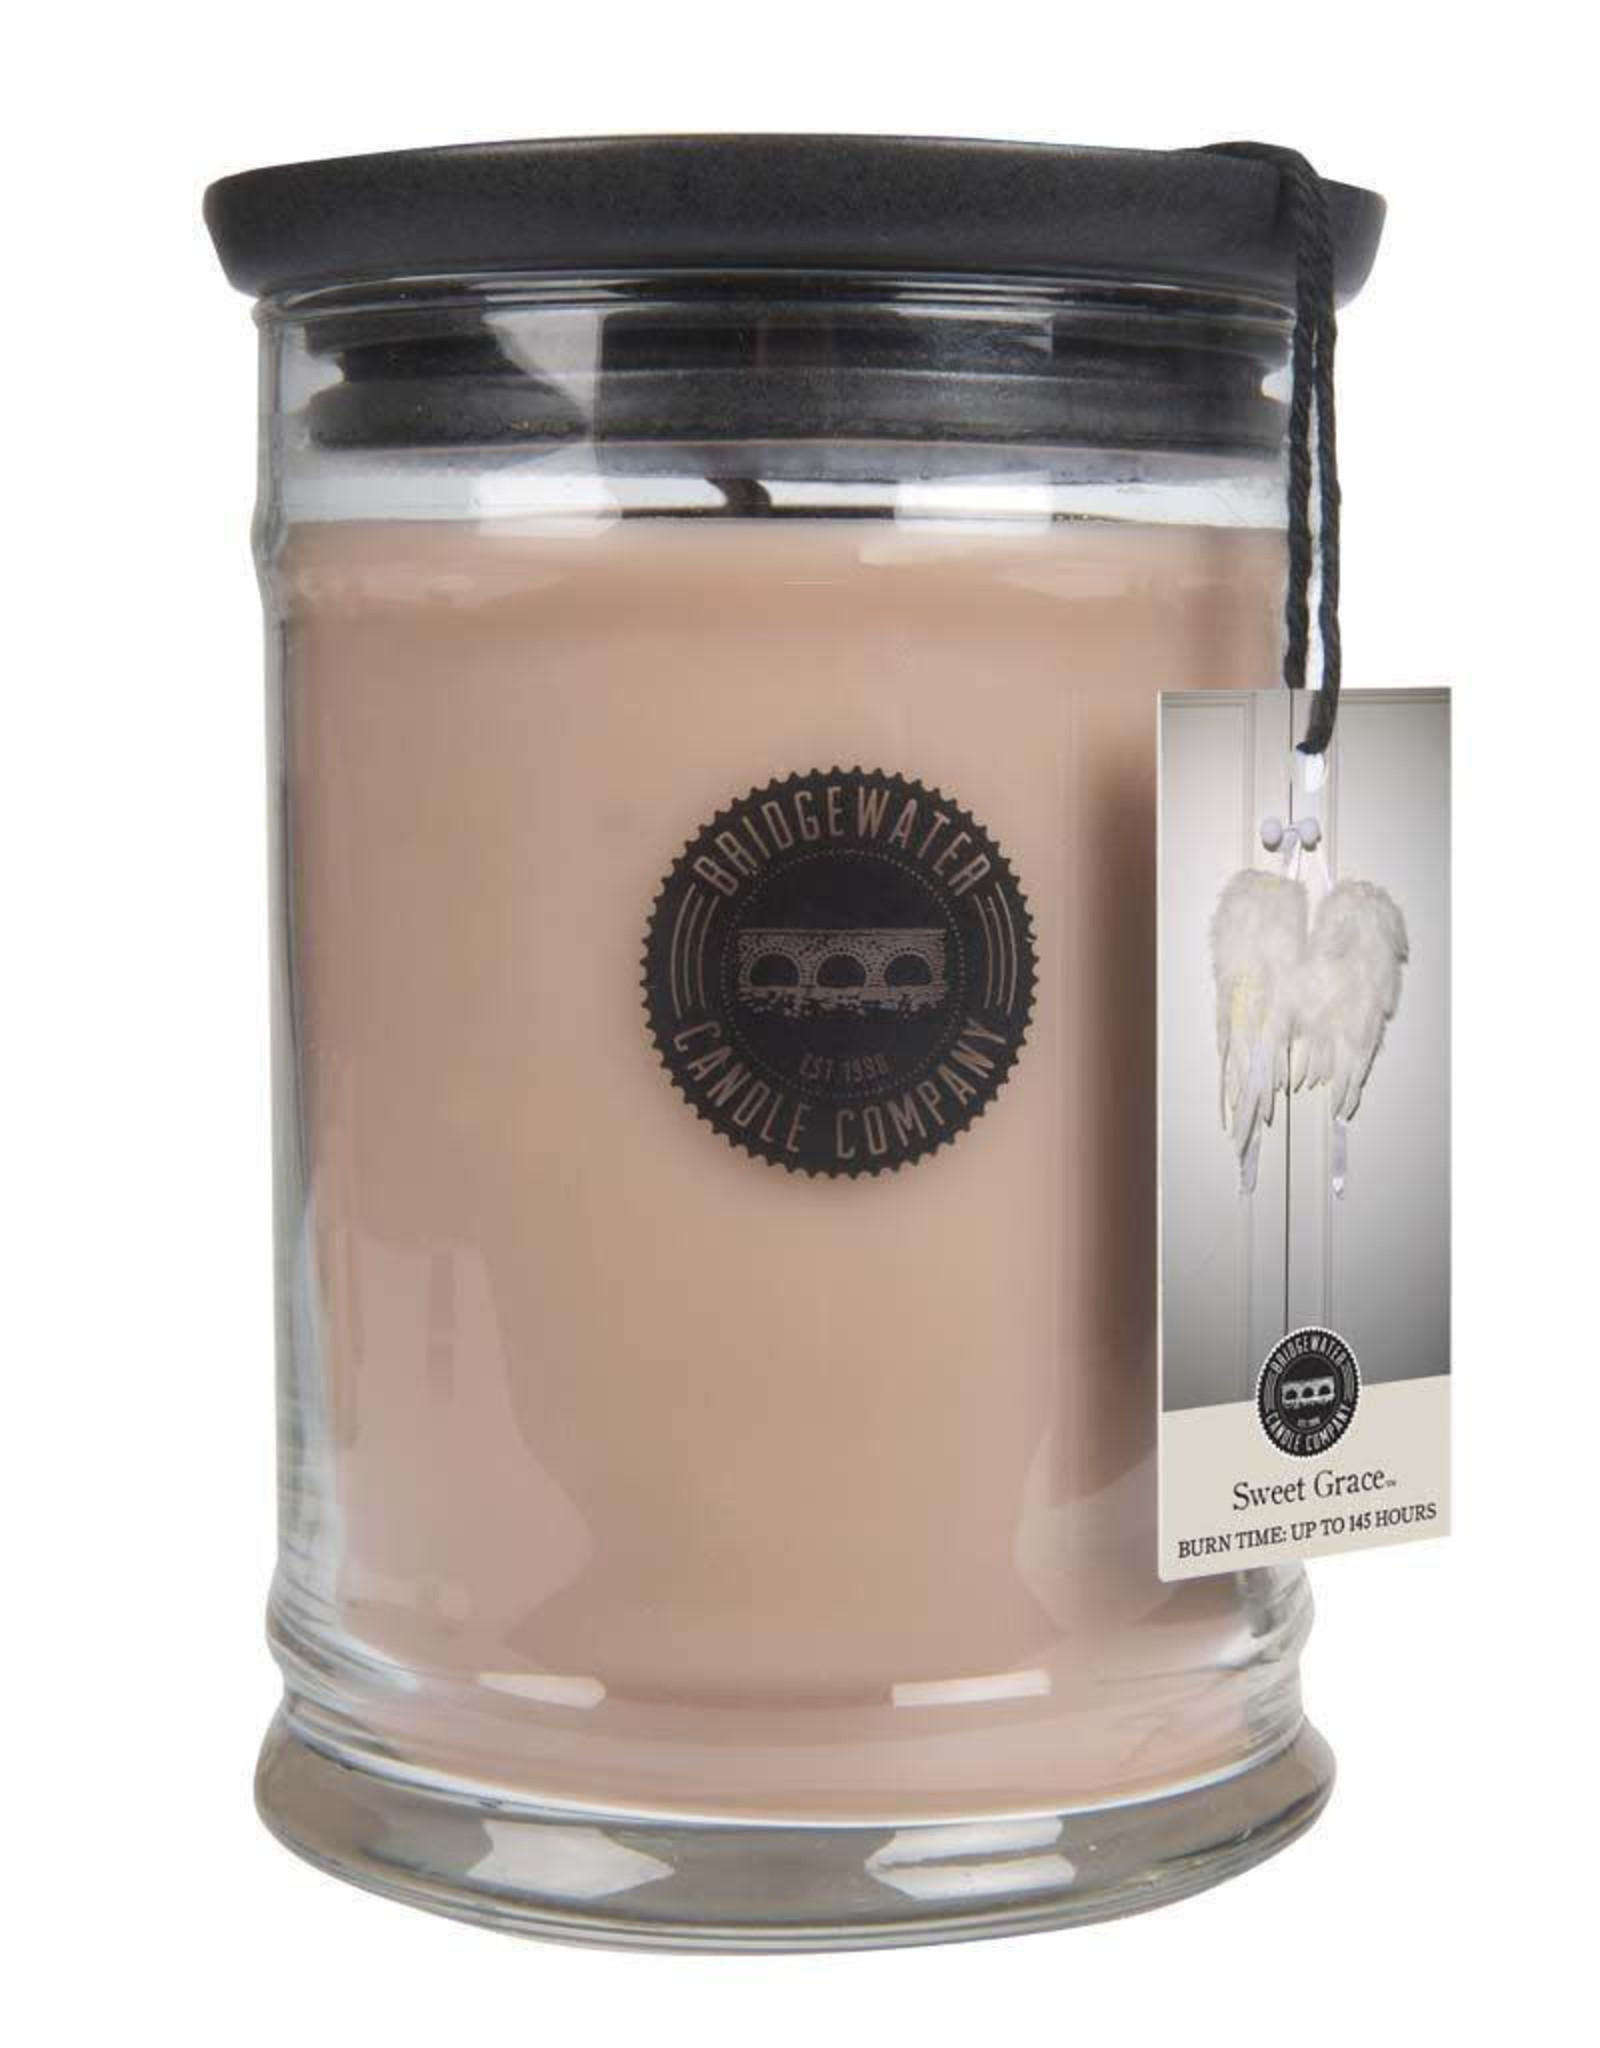 bridgewater sweet grace - large jar candle